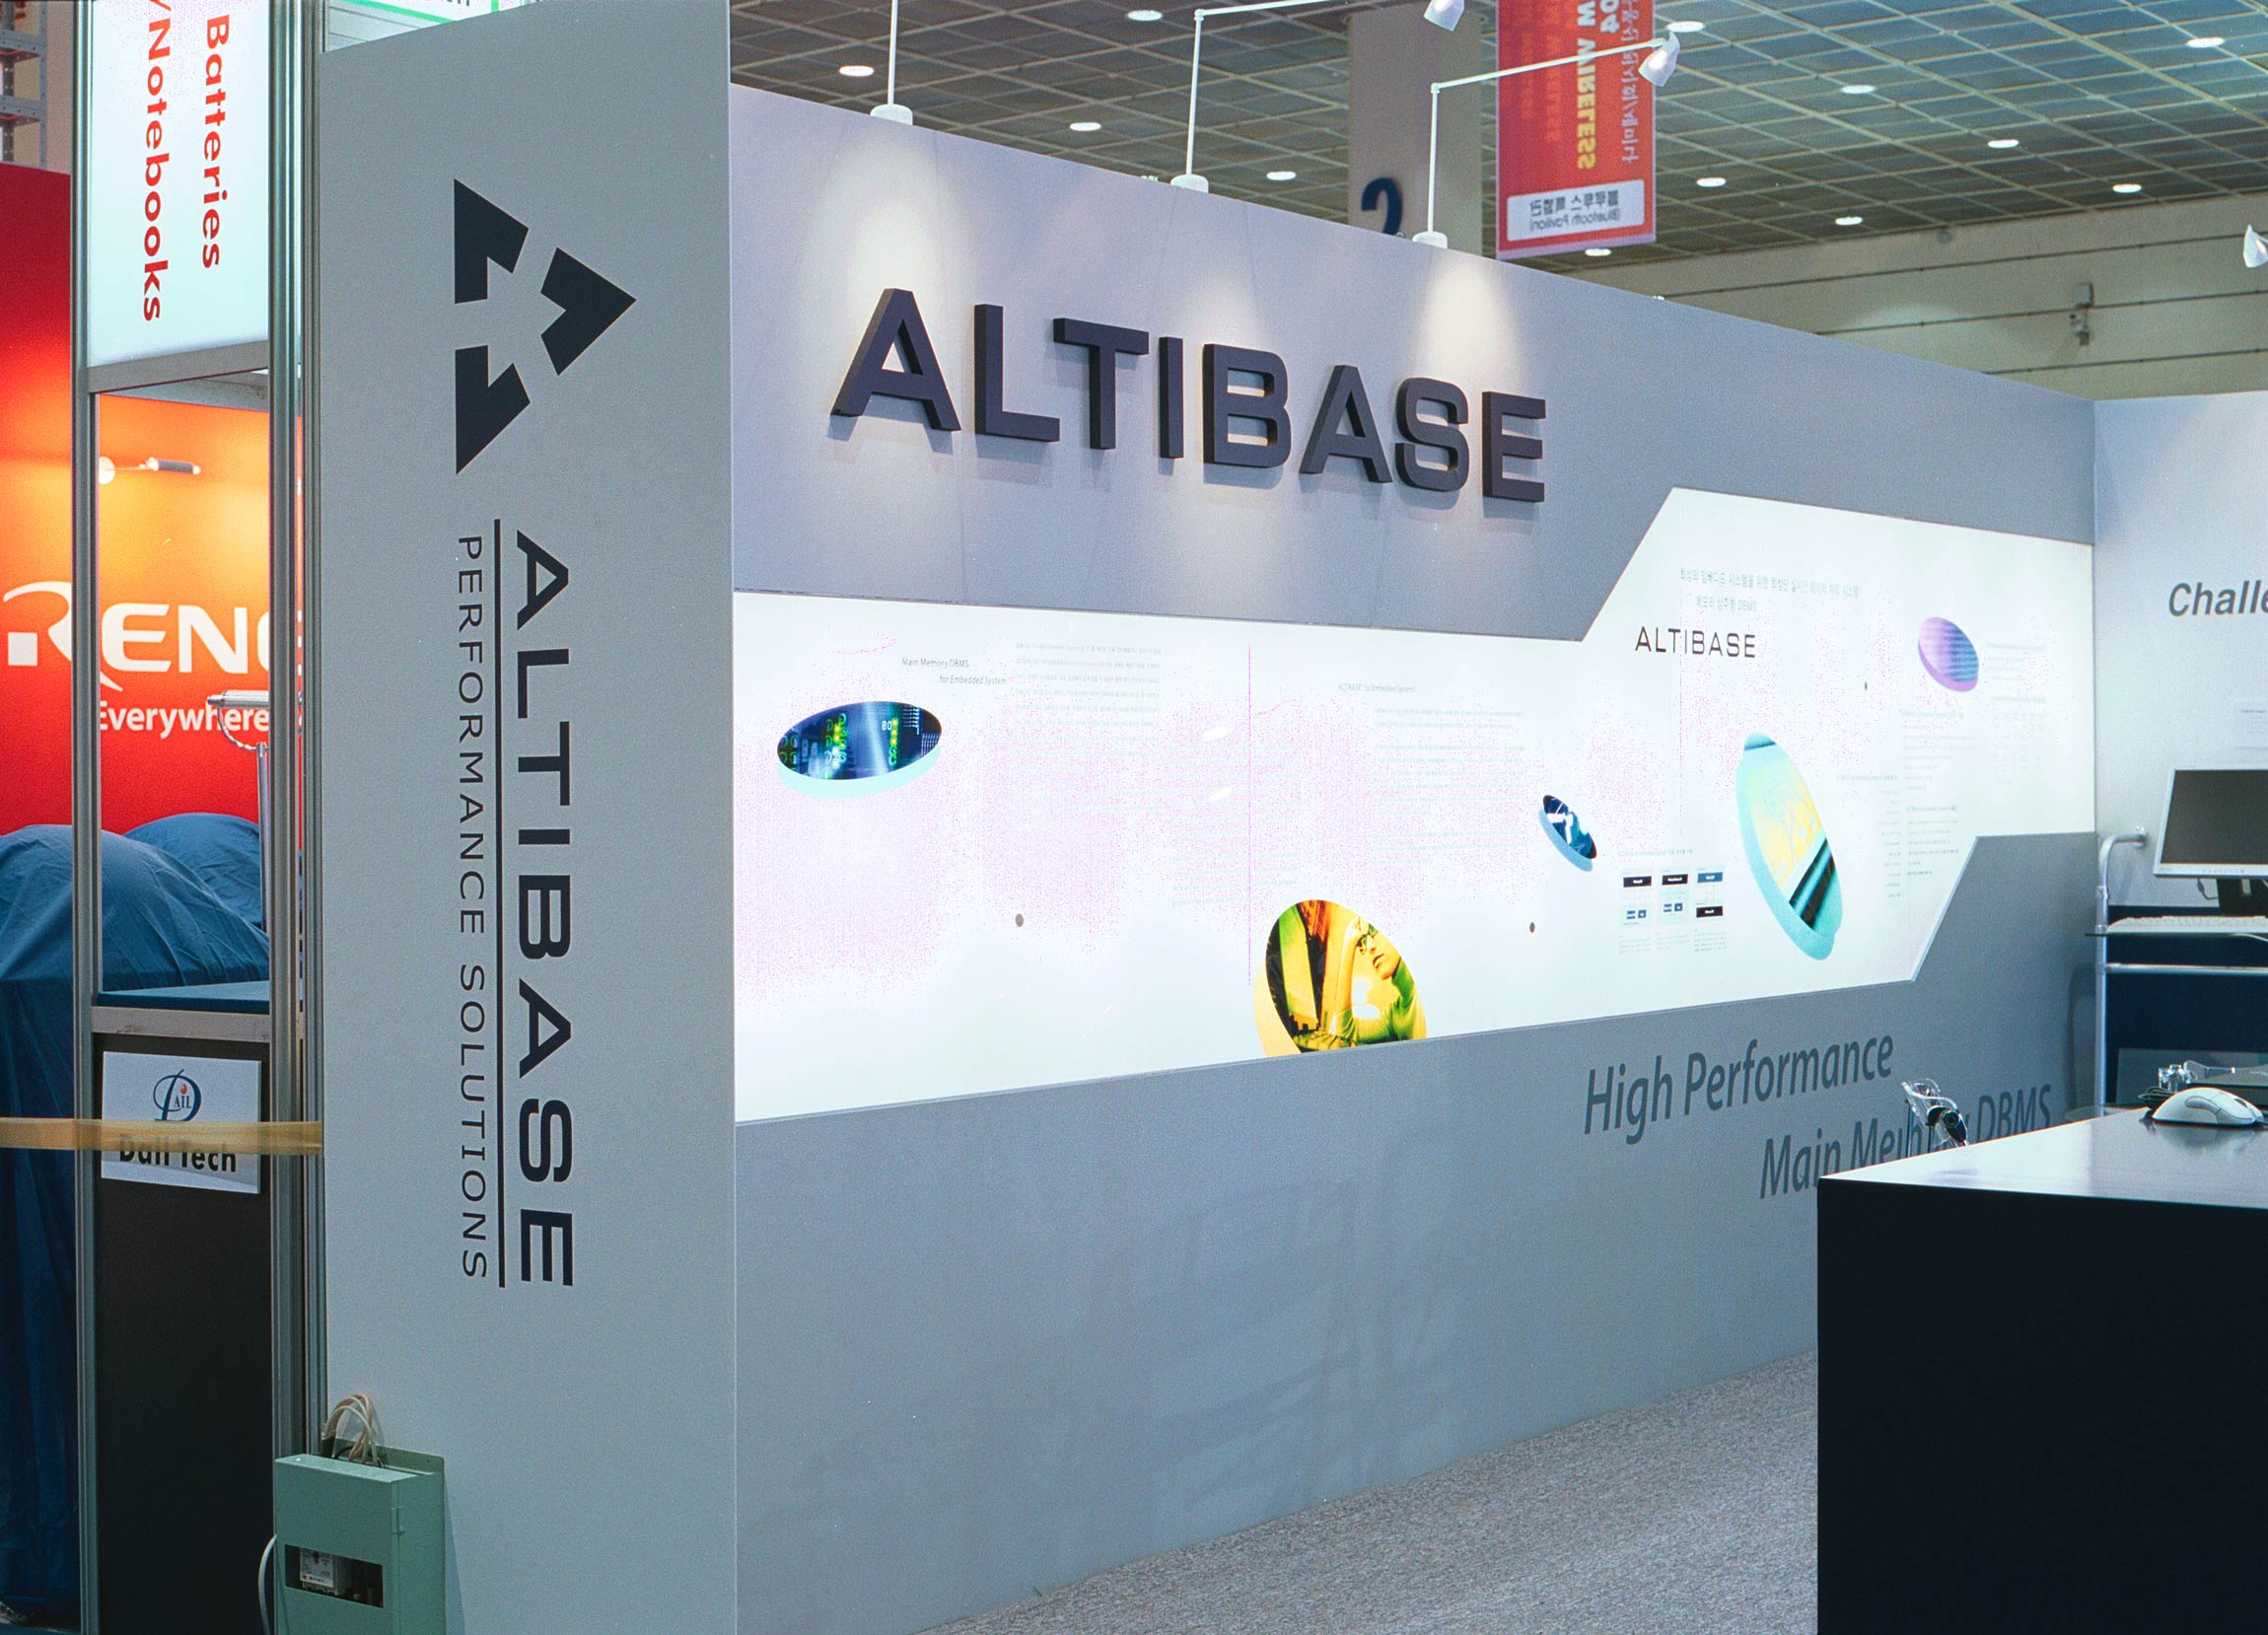 Altibase at ITU Telecom Altibase Exibition & Environmental altibase-booth-09.jpg